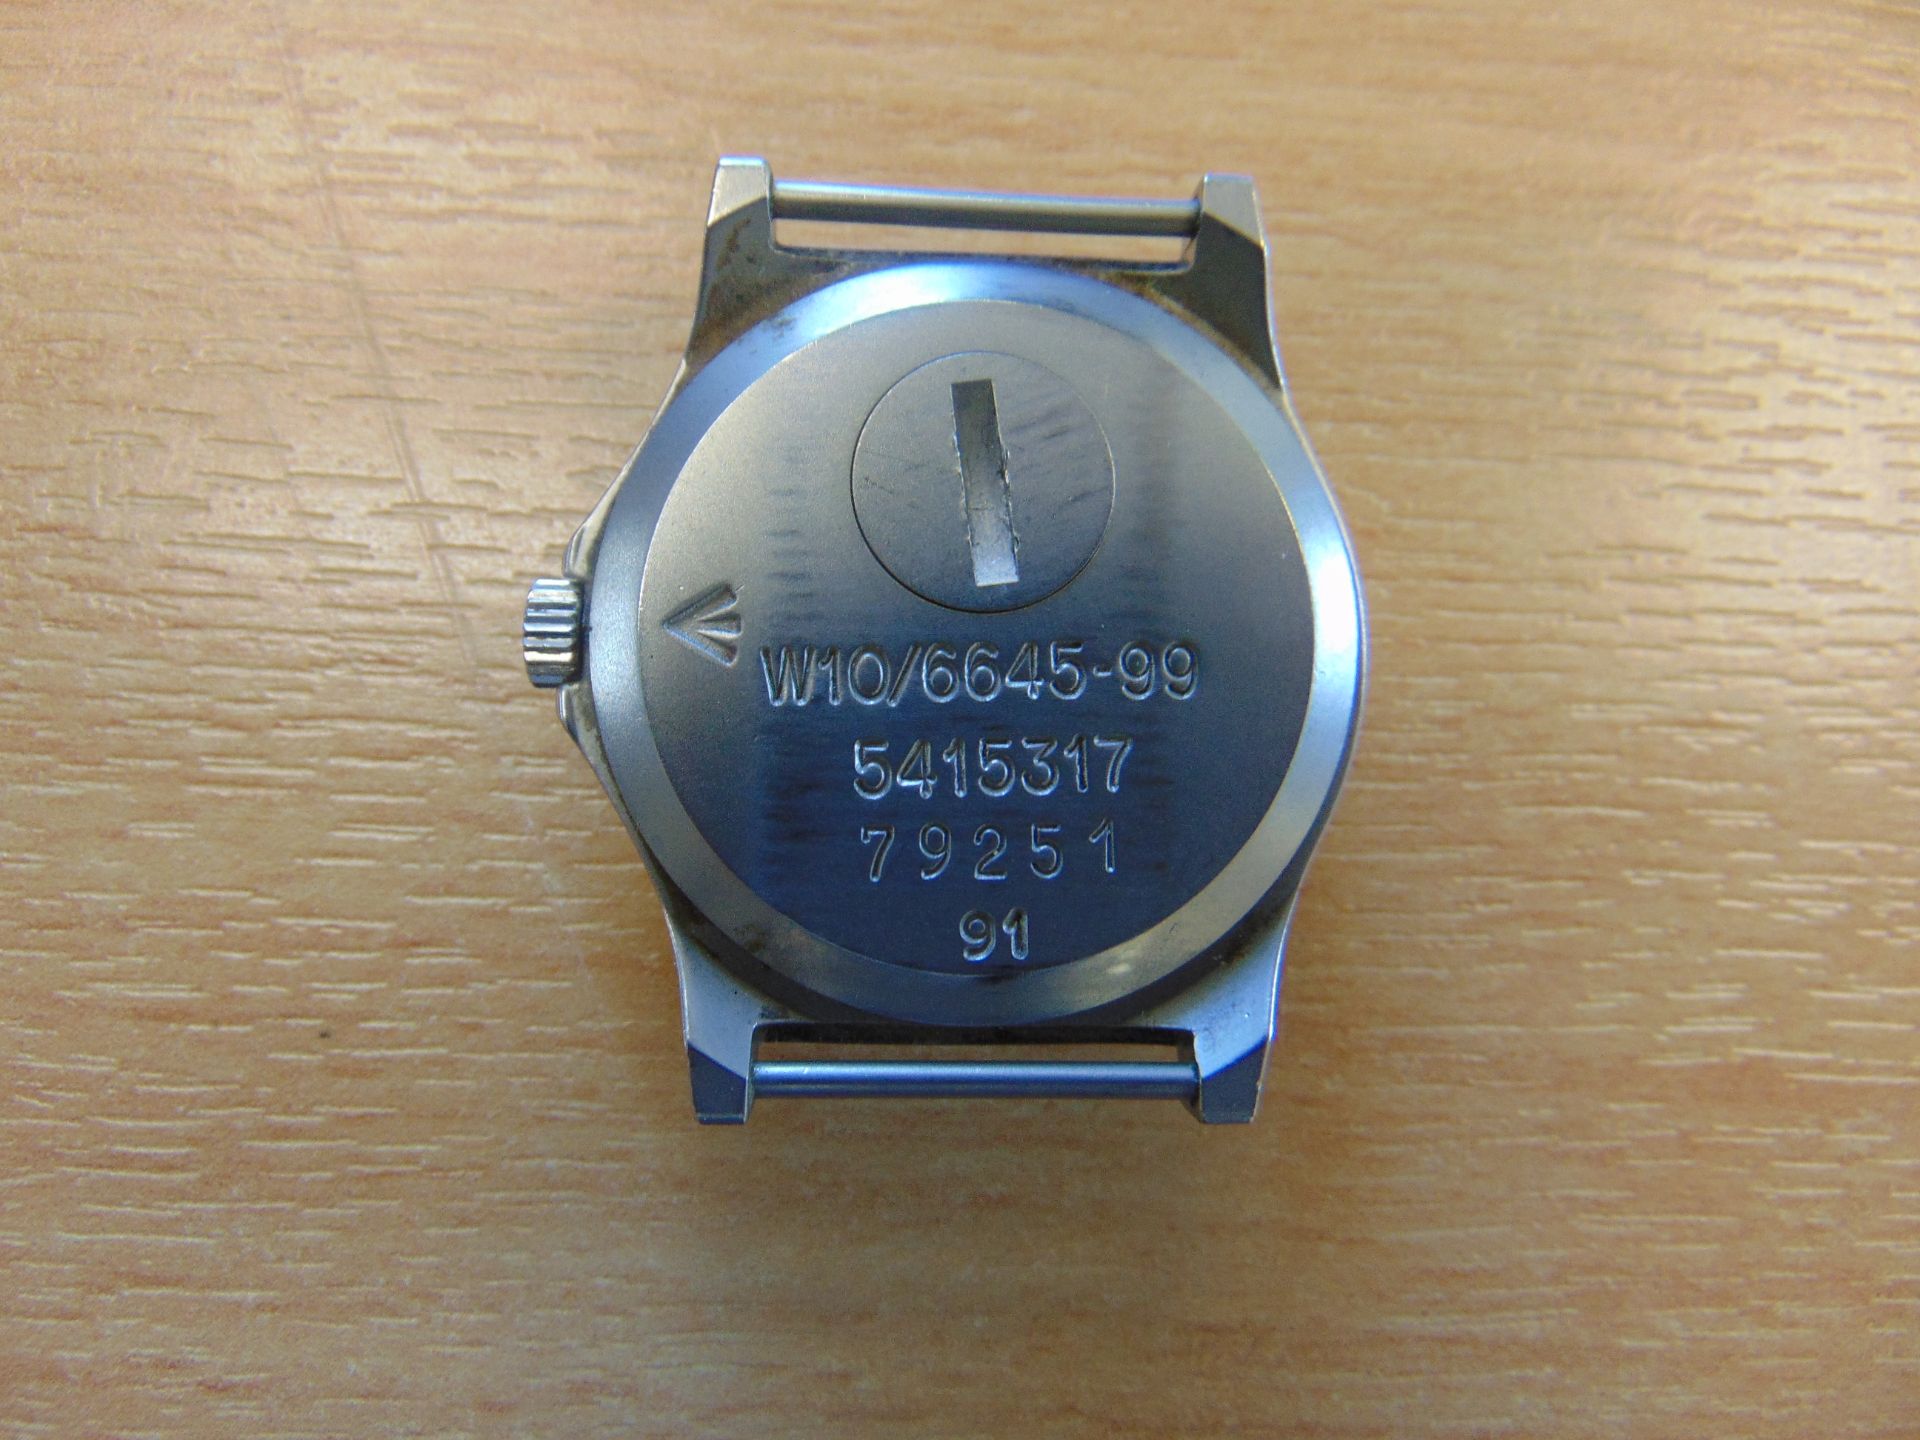 CWC (Cabot Watch Co) British Army W10 Service Watch, Date 1991, Gulf War 1, New Batt/Strap - Image 4 of 5